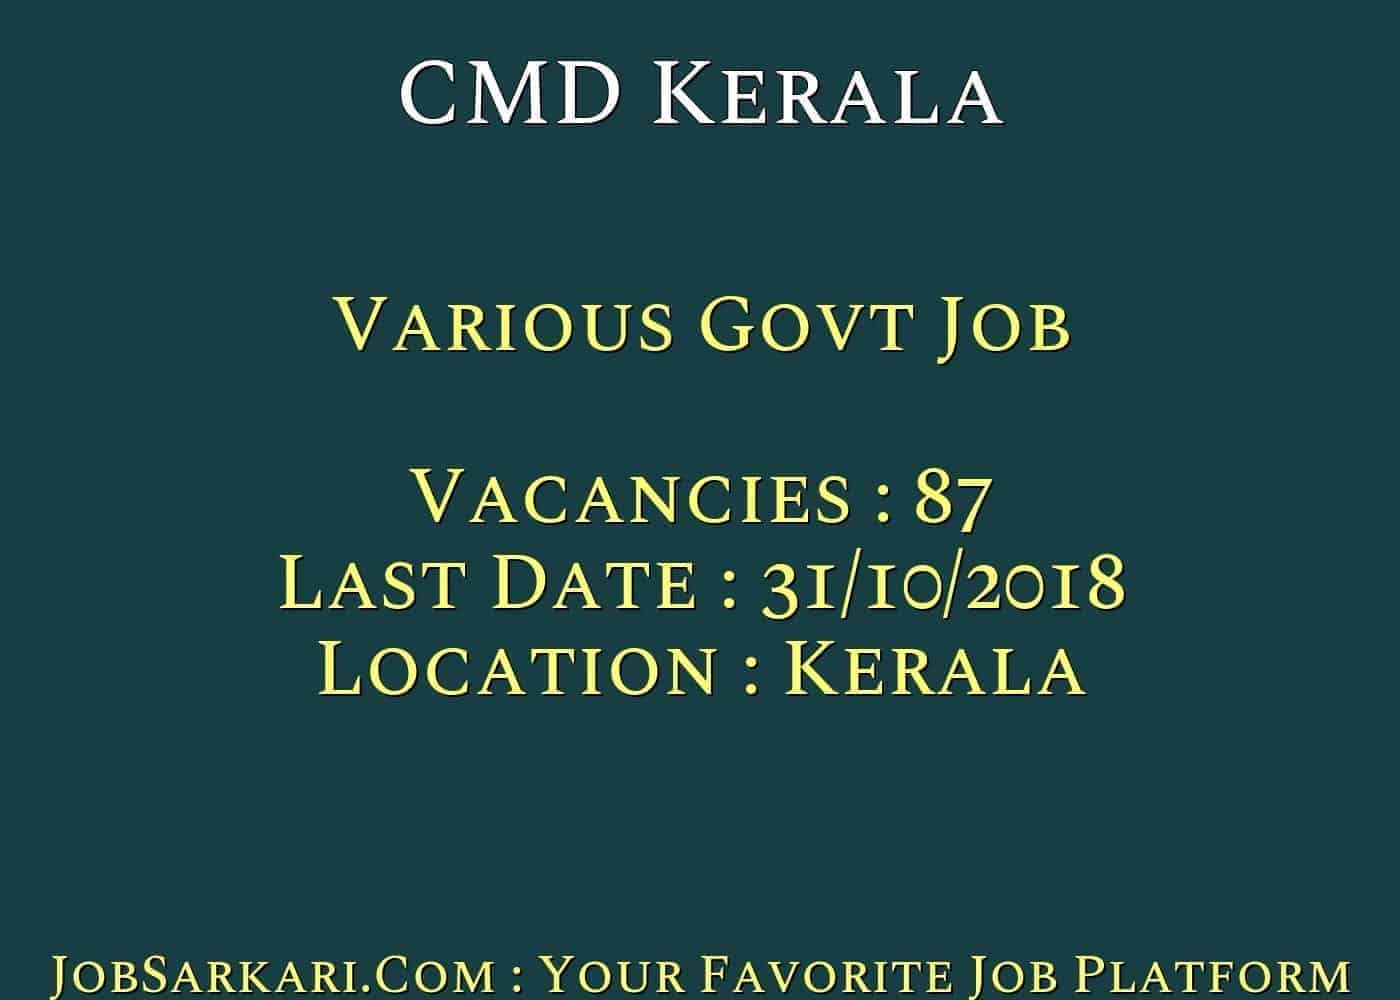 CMD Kerala Recruitment 2018 for Various Govt Job